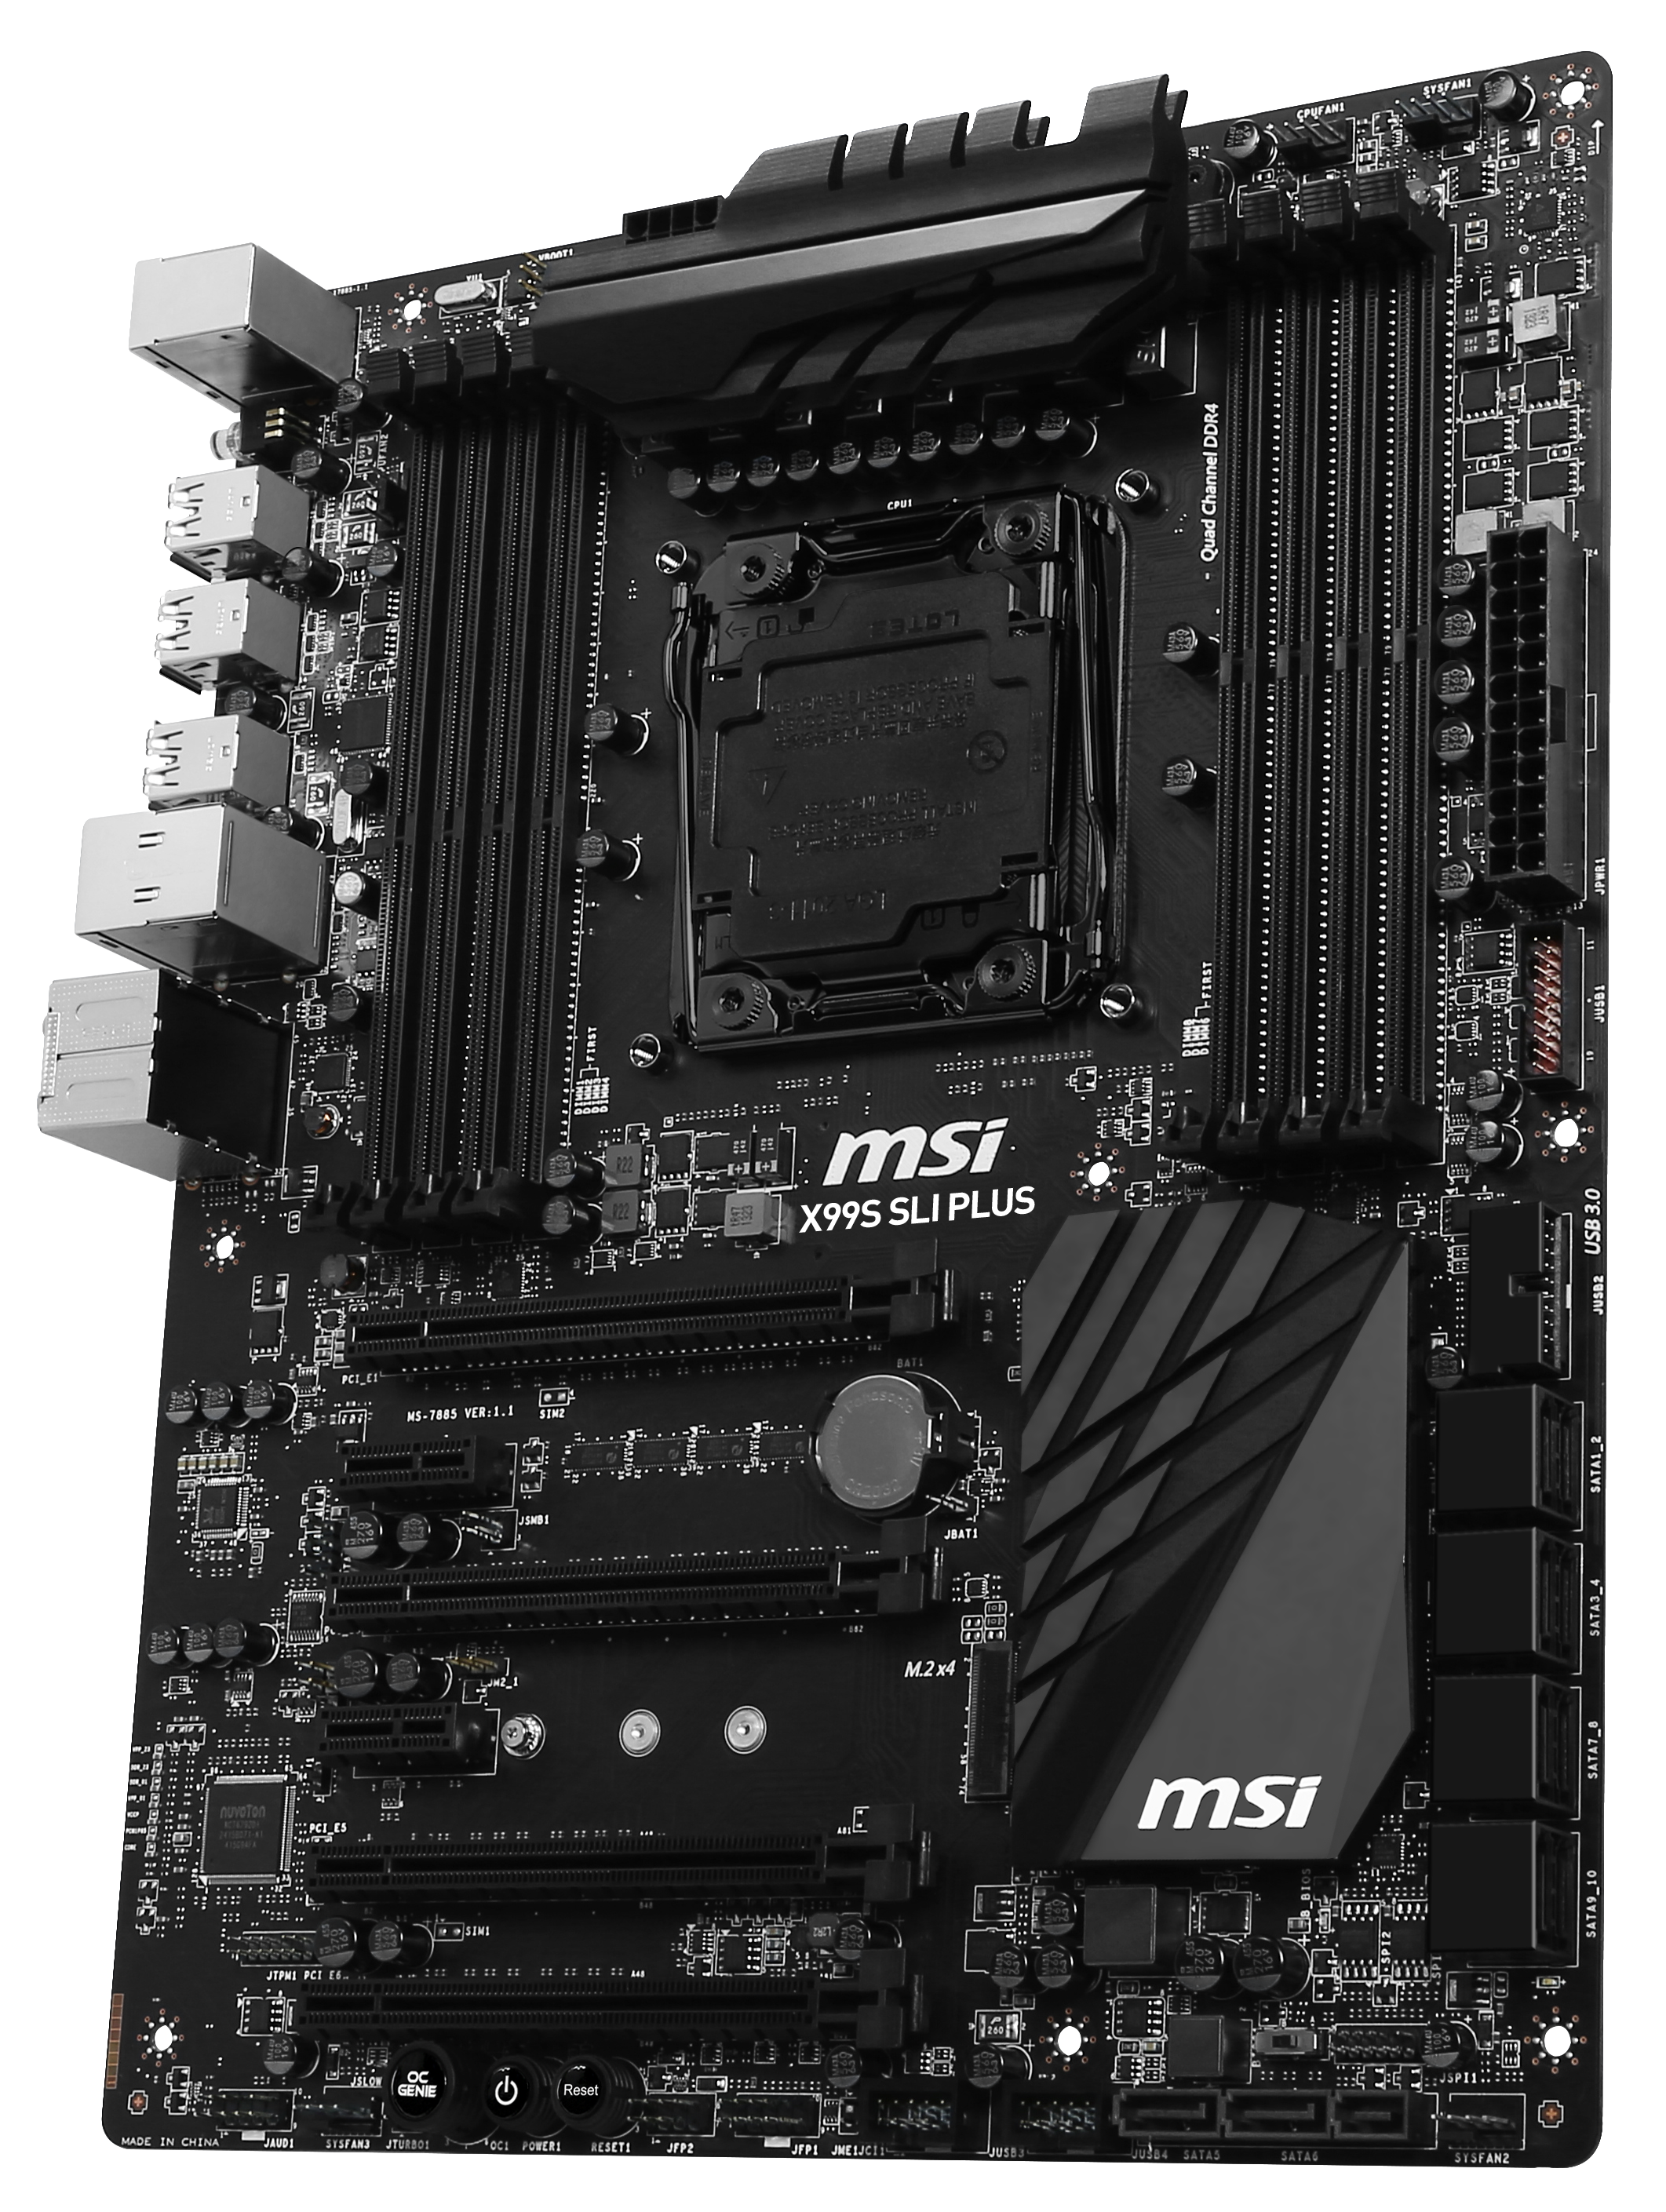 MSI X99S SLI Plus Overview